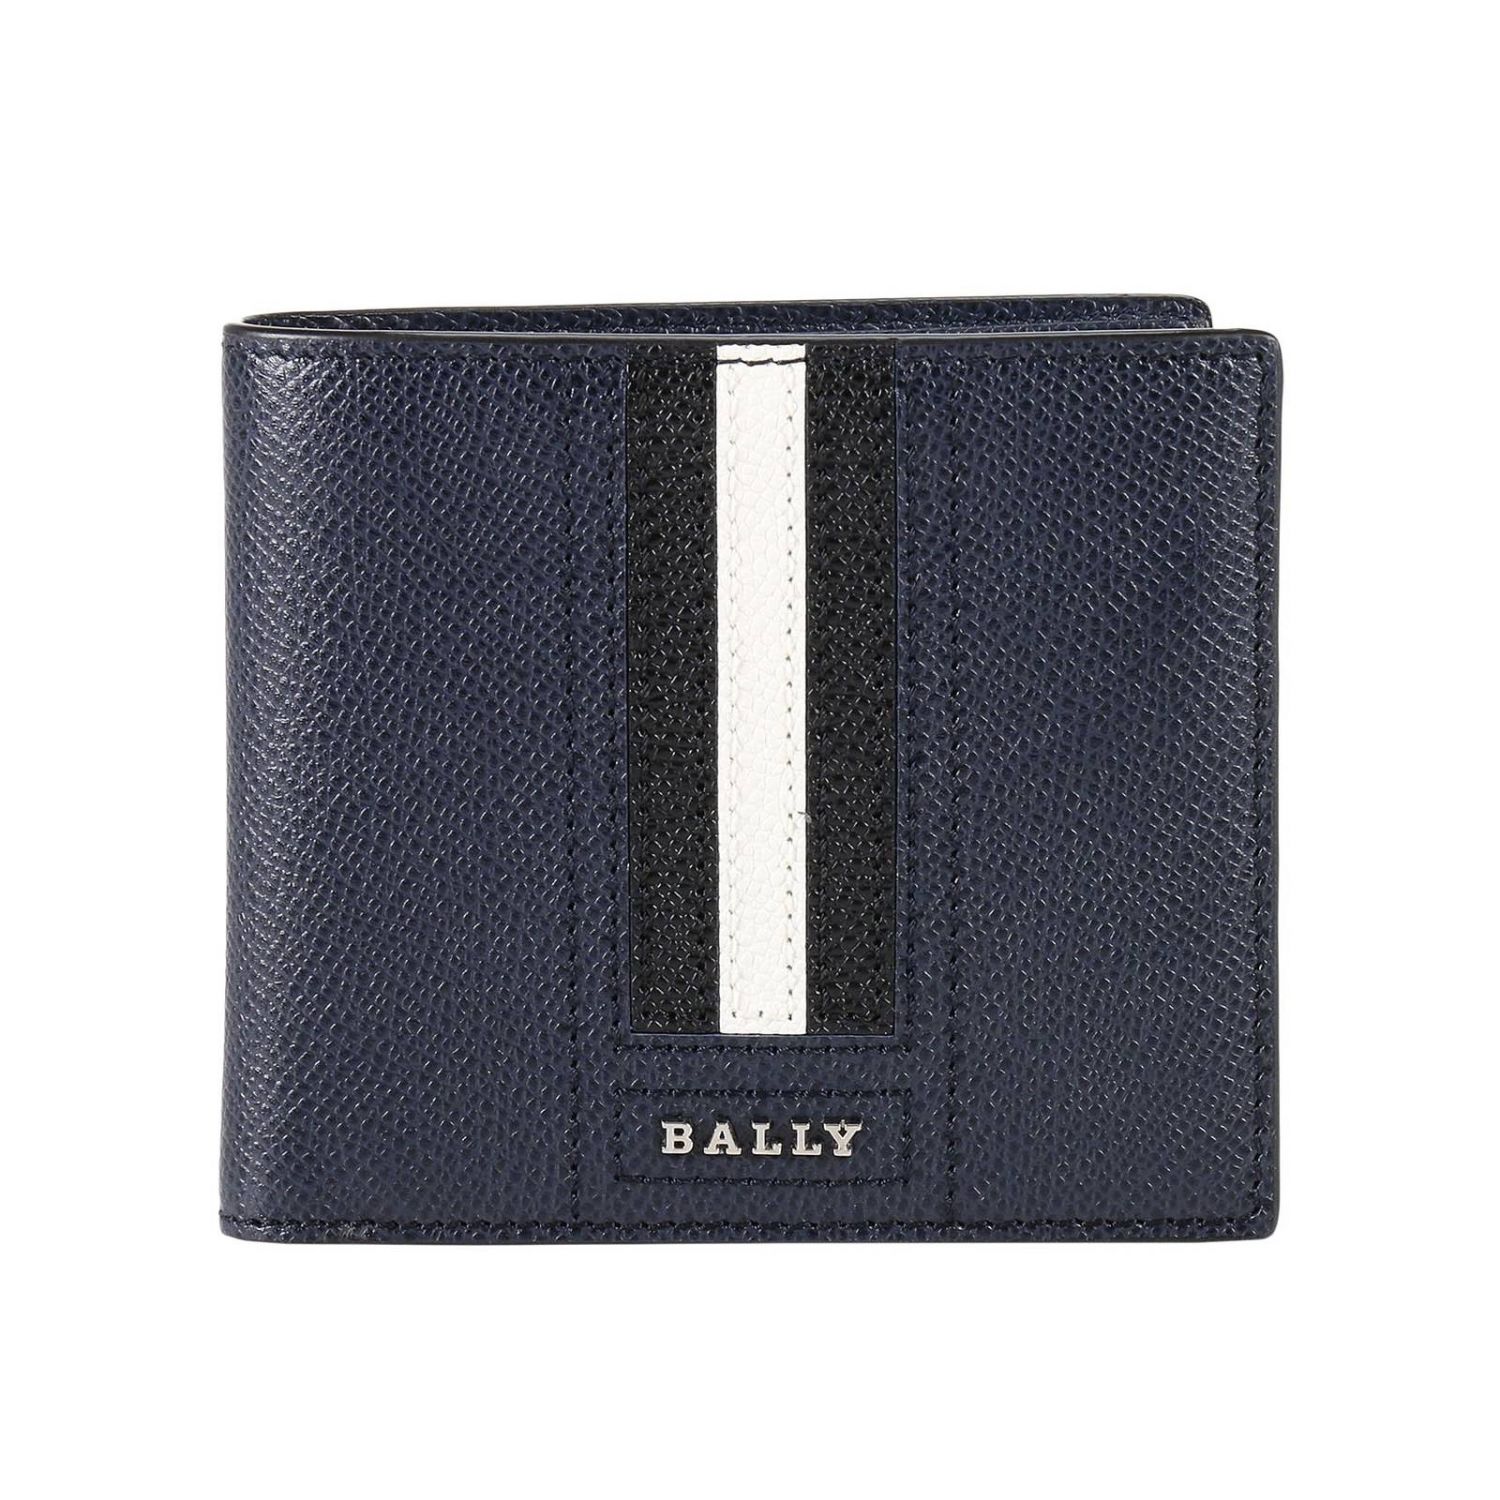 Bally Outlet: Wallet men | Wallet Bally Men Blue | Wallet Bally TRASAI.LT Giglio UK